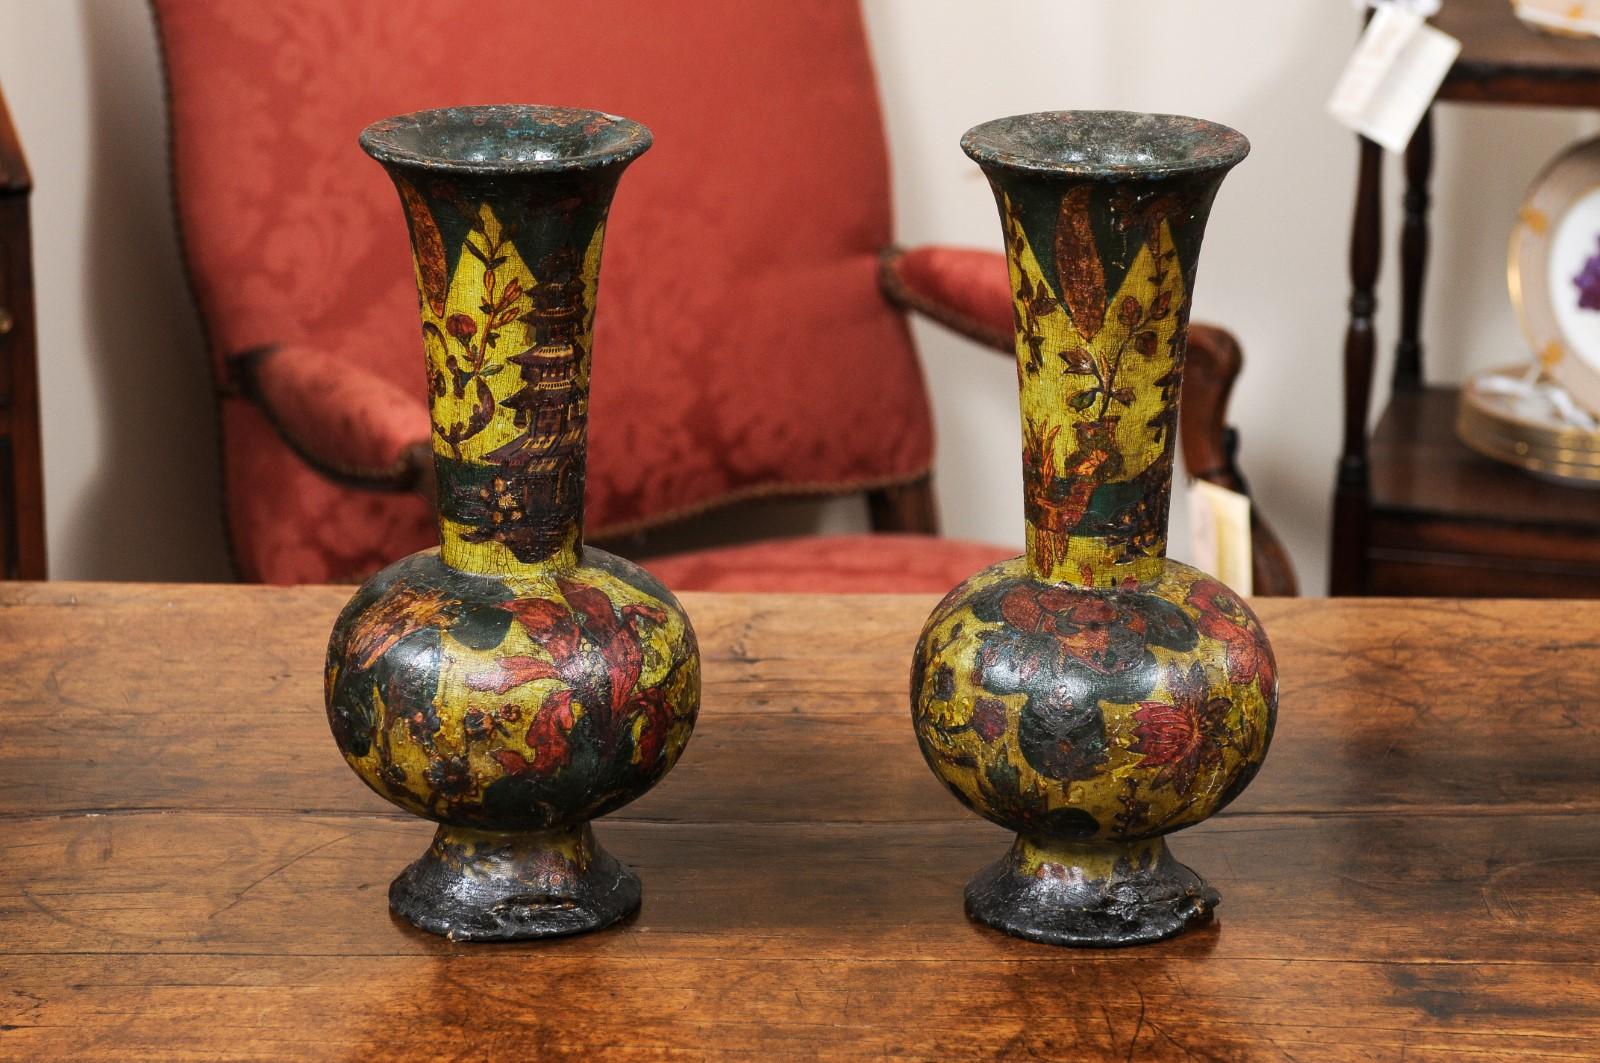  Pair of Italian Decoupage Wood Vases, 19th Century For Sale 2